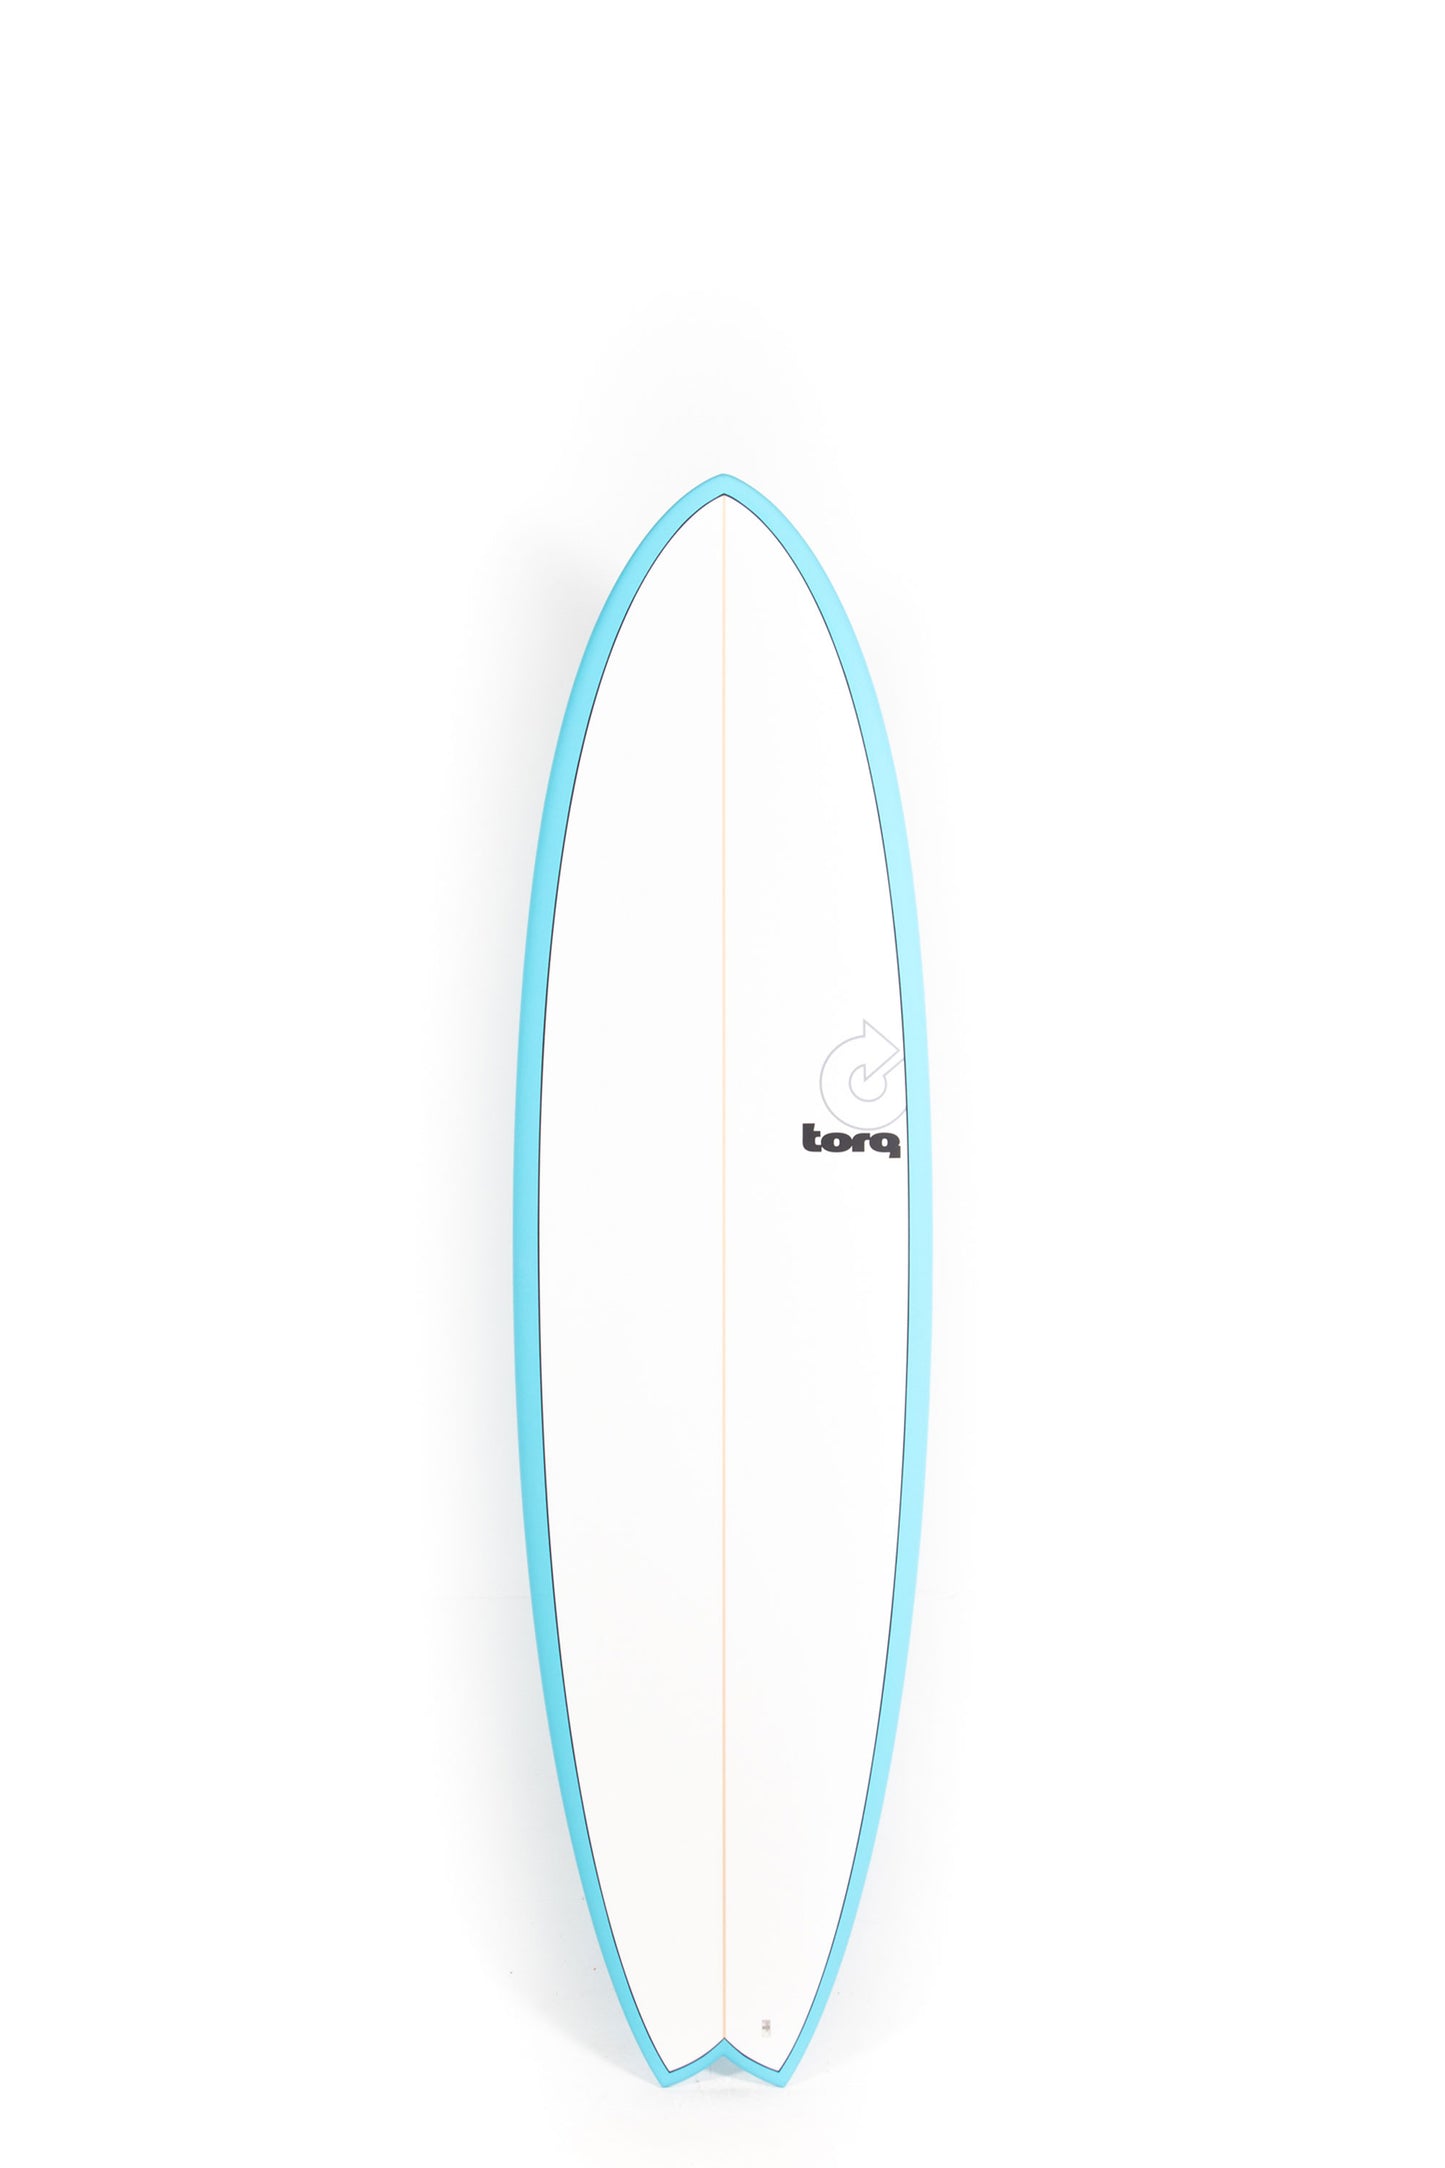 Pukas Surf Shop - Torq Surfboards - MODFISH - 7'2" x 22 1/2 x 3 - 52,7L